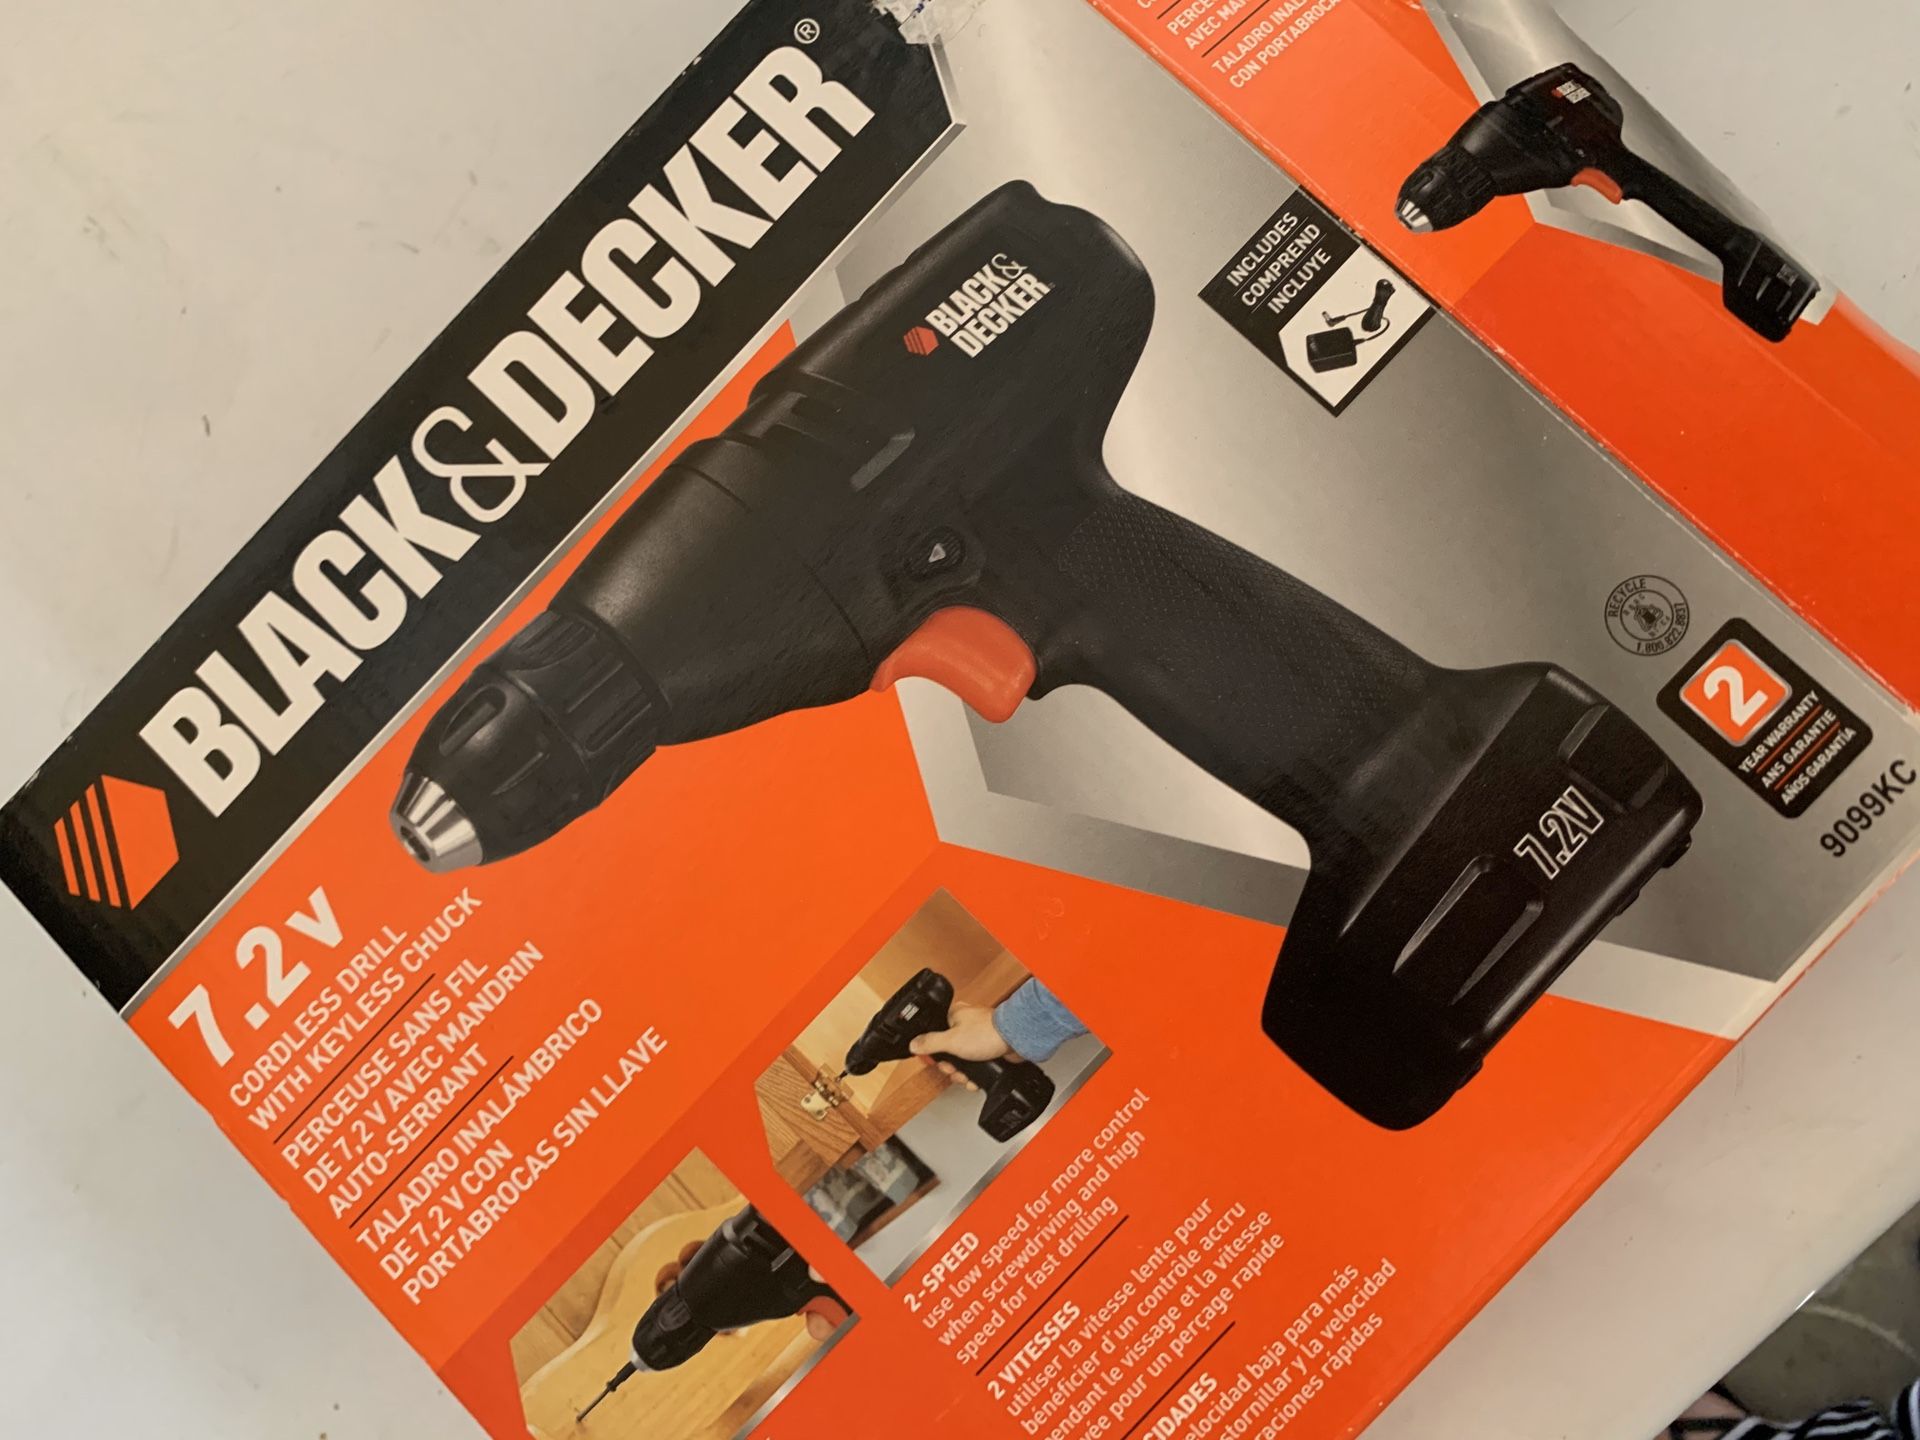 Black & Decker cordless drill